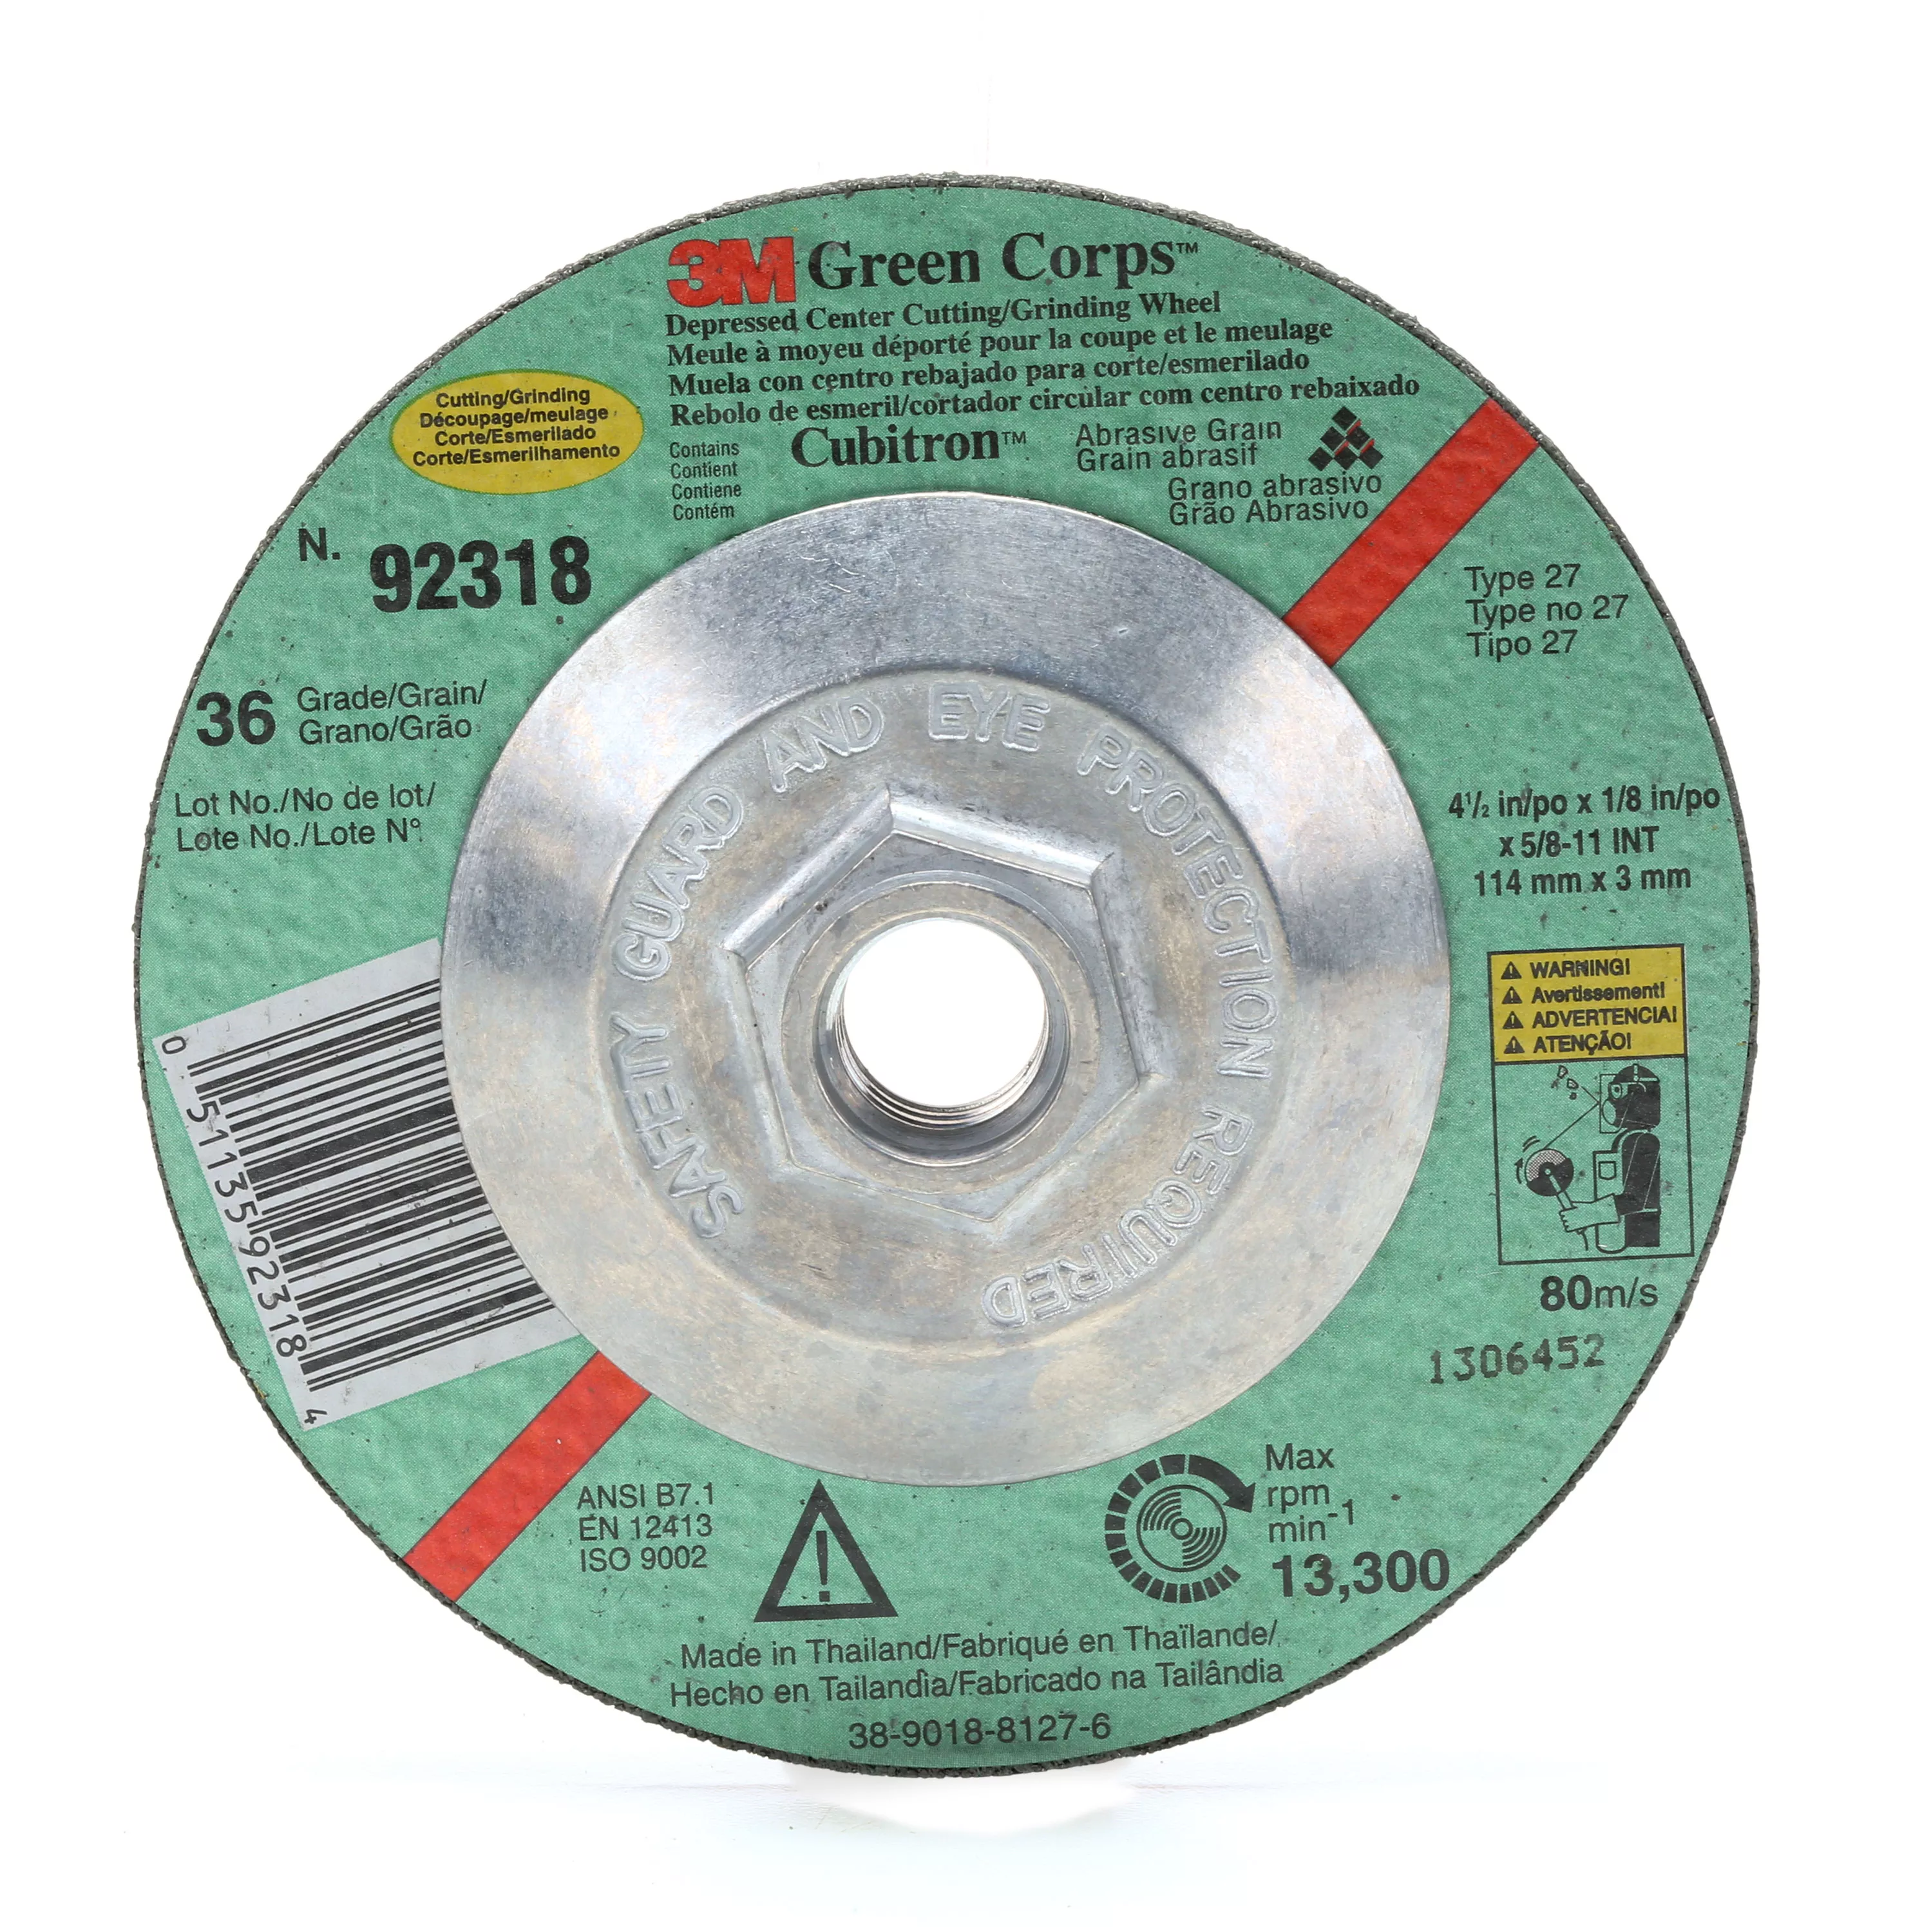 SKU 7000118488 | 3M™ Green Corps™ Cutting/Grinding Wheel